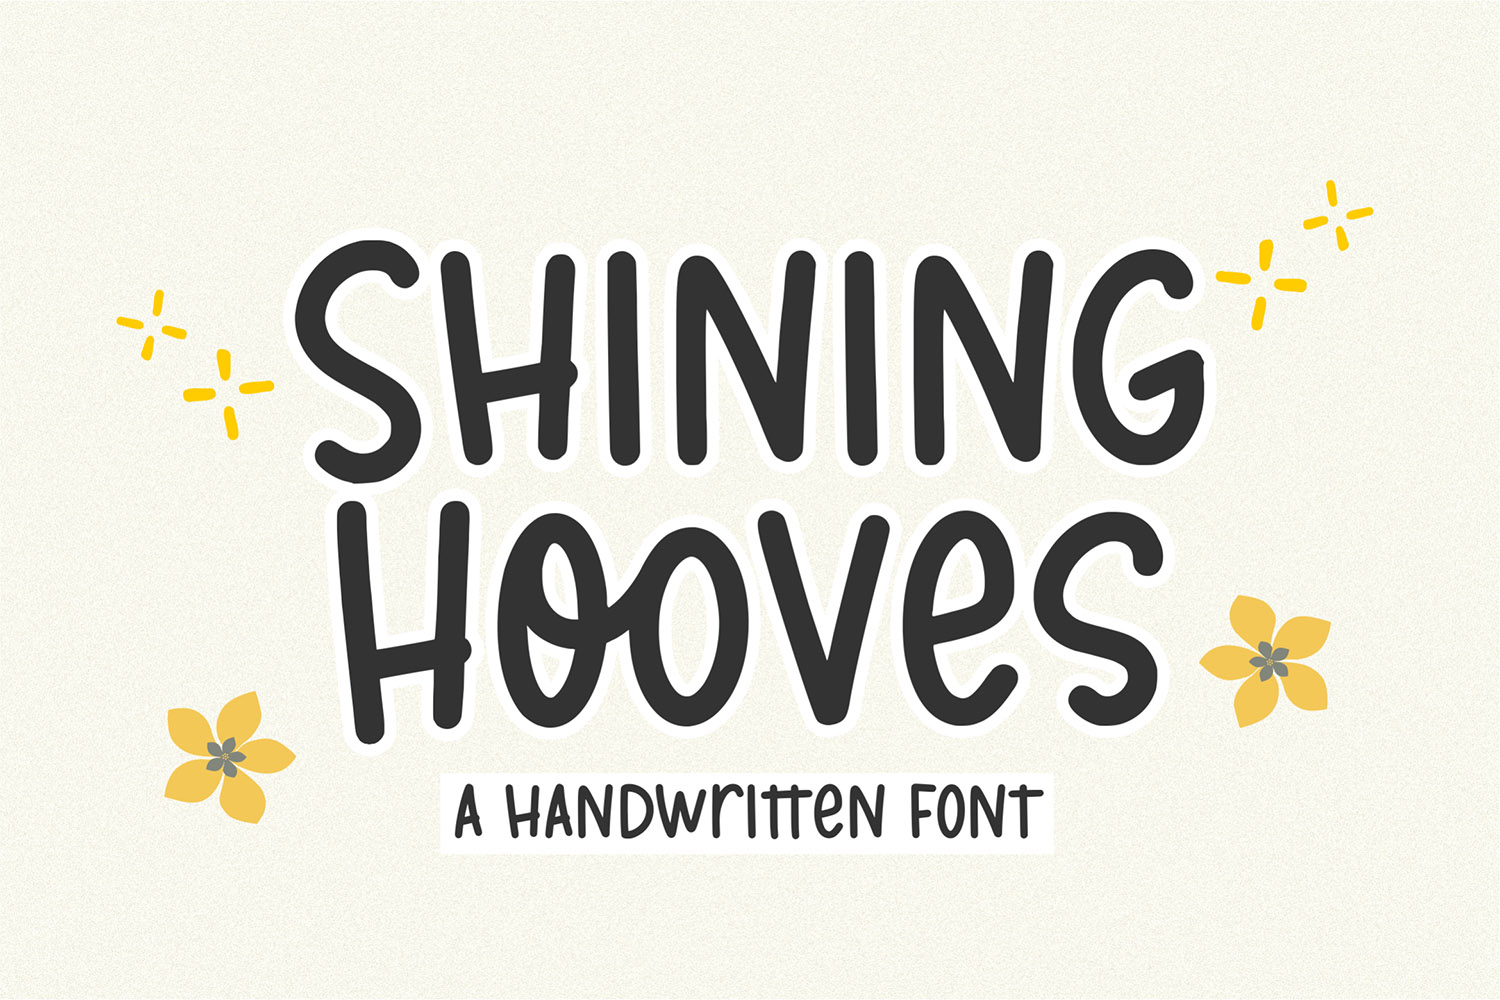 Shining Hooves Free Font